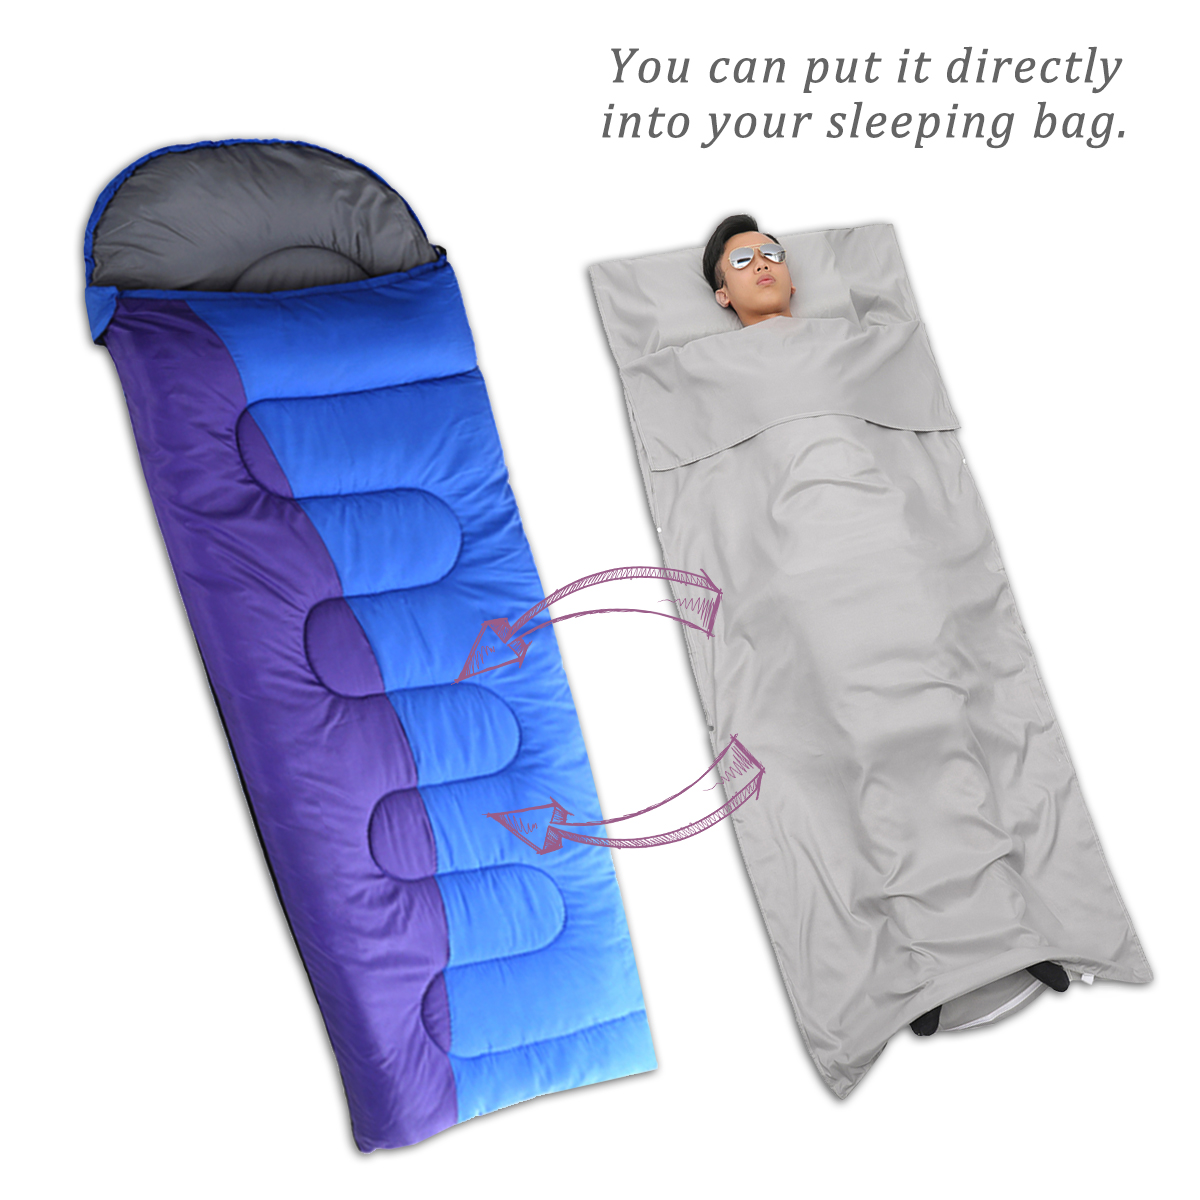 Portable-Sleeping-Bag-Cover-Ultralight-Sleep-Sheet-Outdoor-Camping-Hiking-Travel-Bag-1883995-6